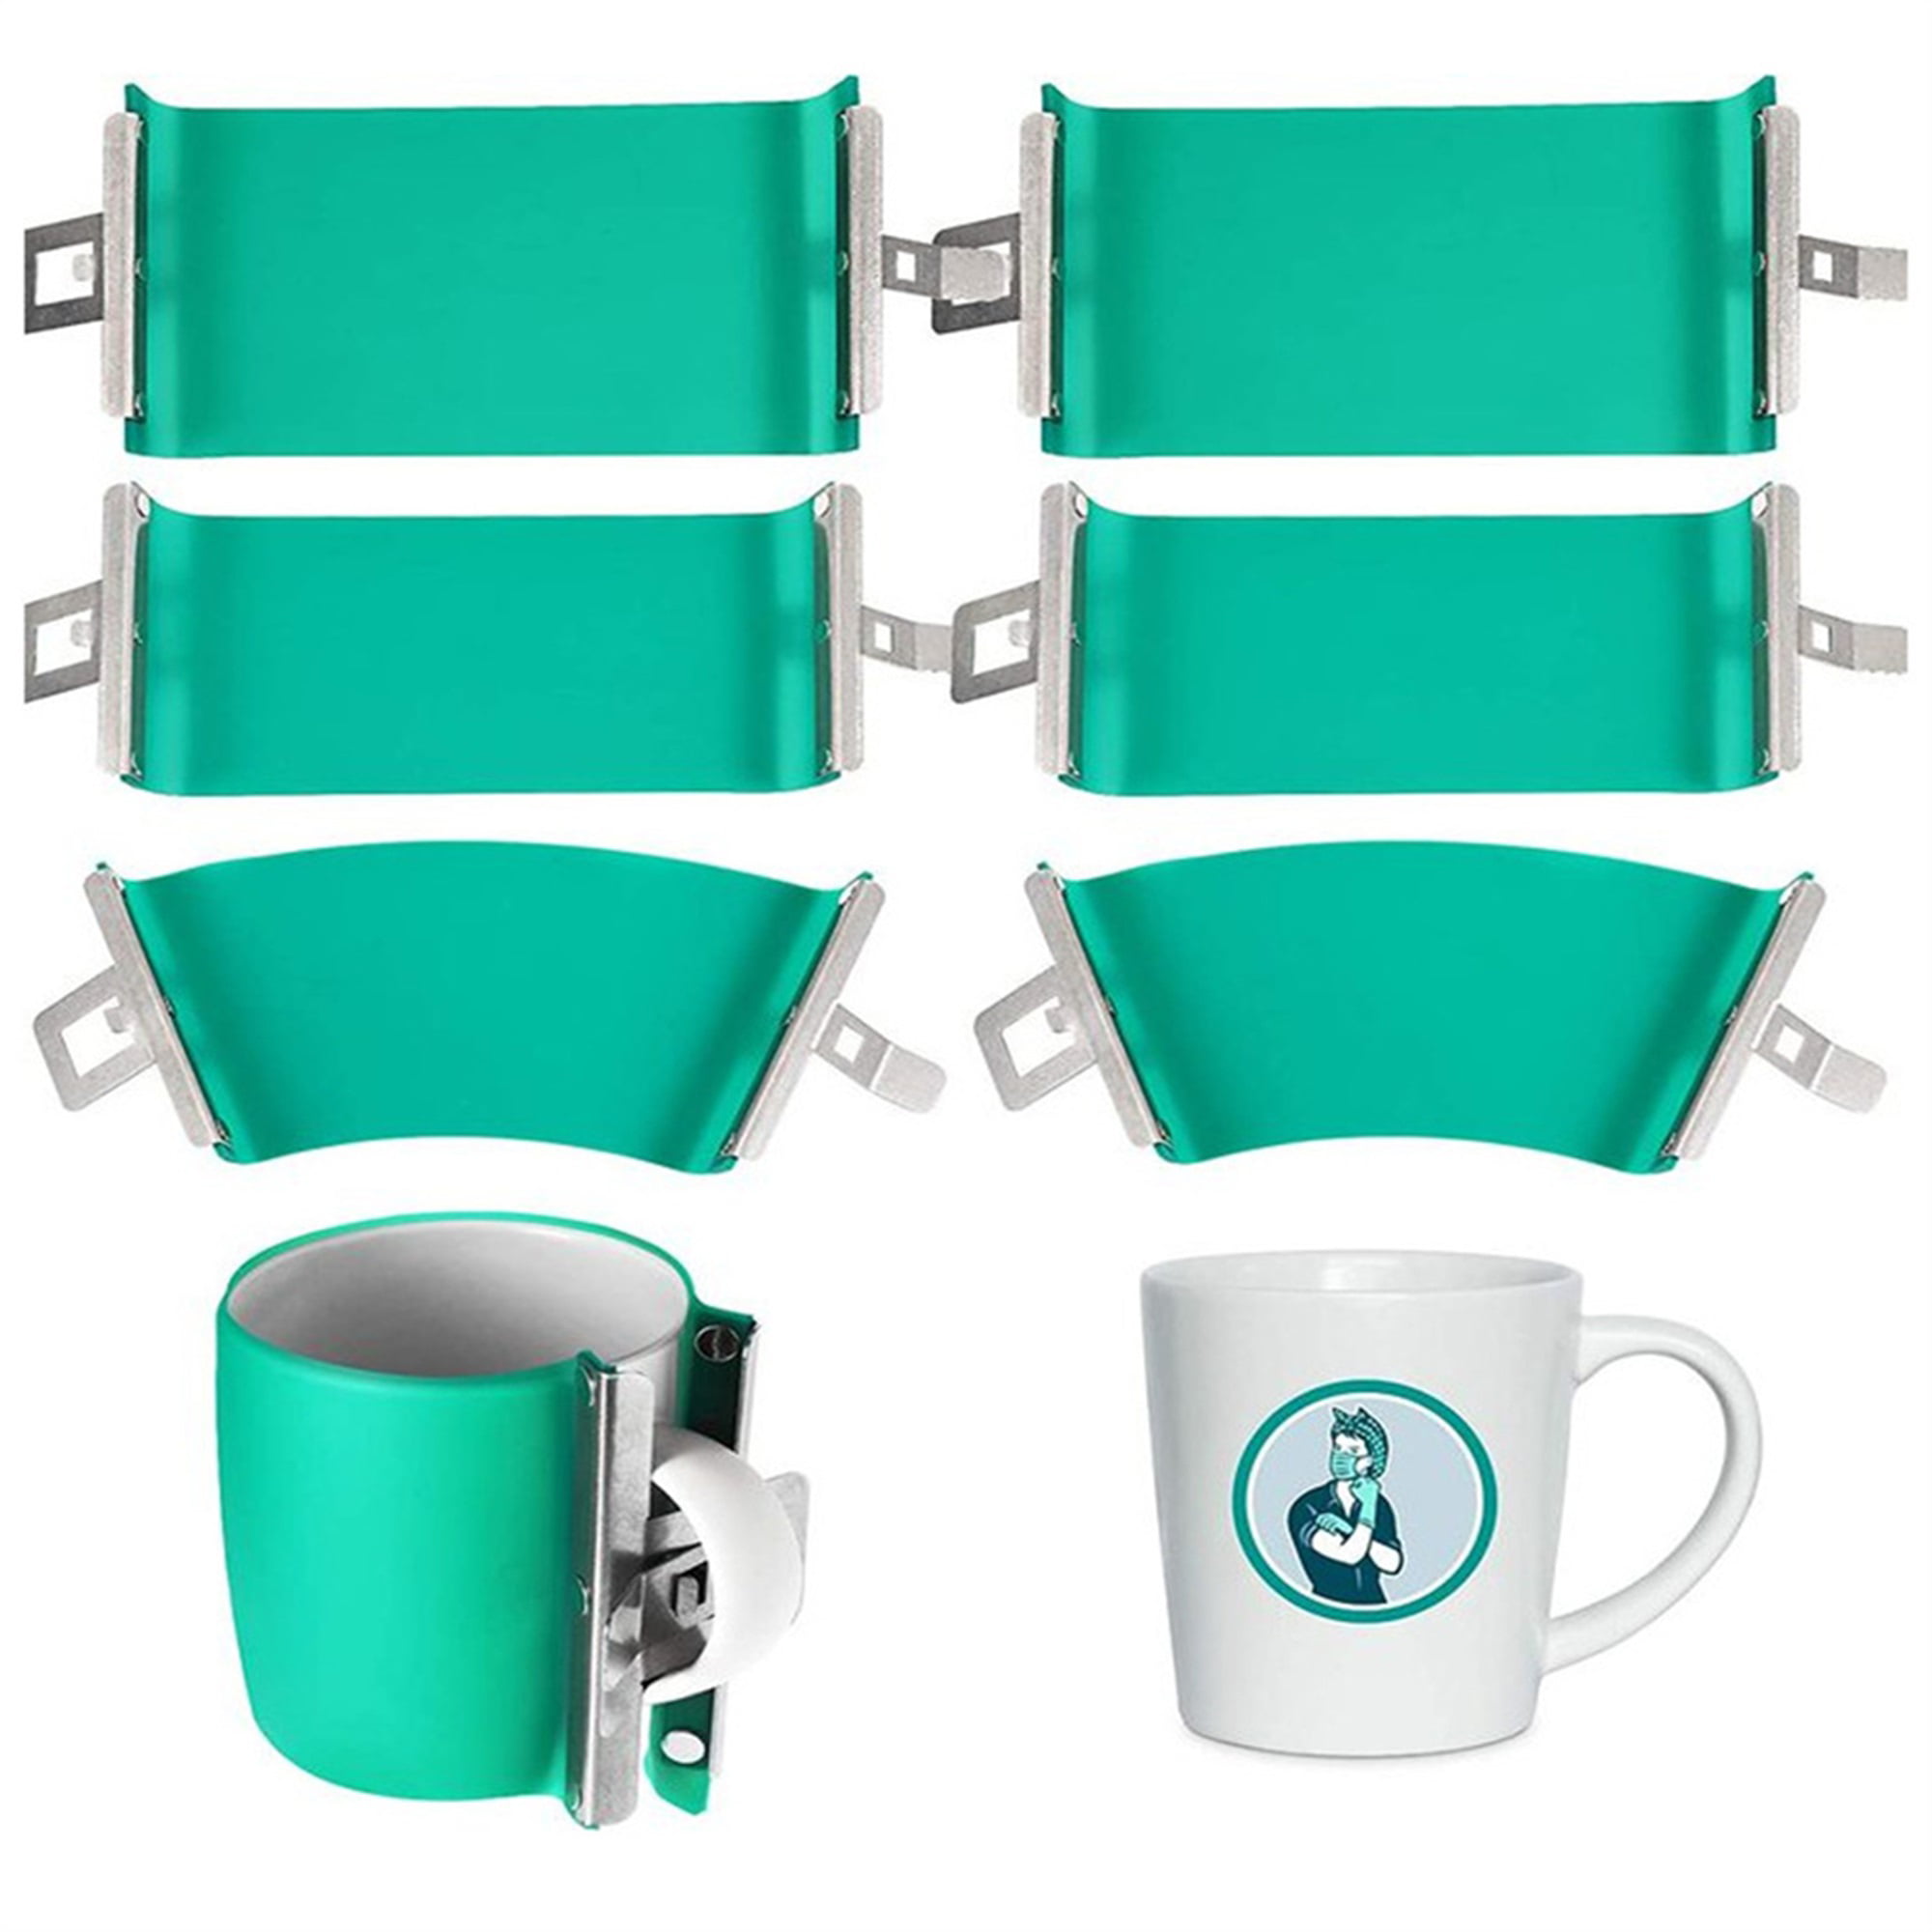 15OZ Cup Clamp Fixture for Printing Mugs ompait 3D Mug Transfer Sublimation Silicone Mug Wrap Mug Mold 